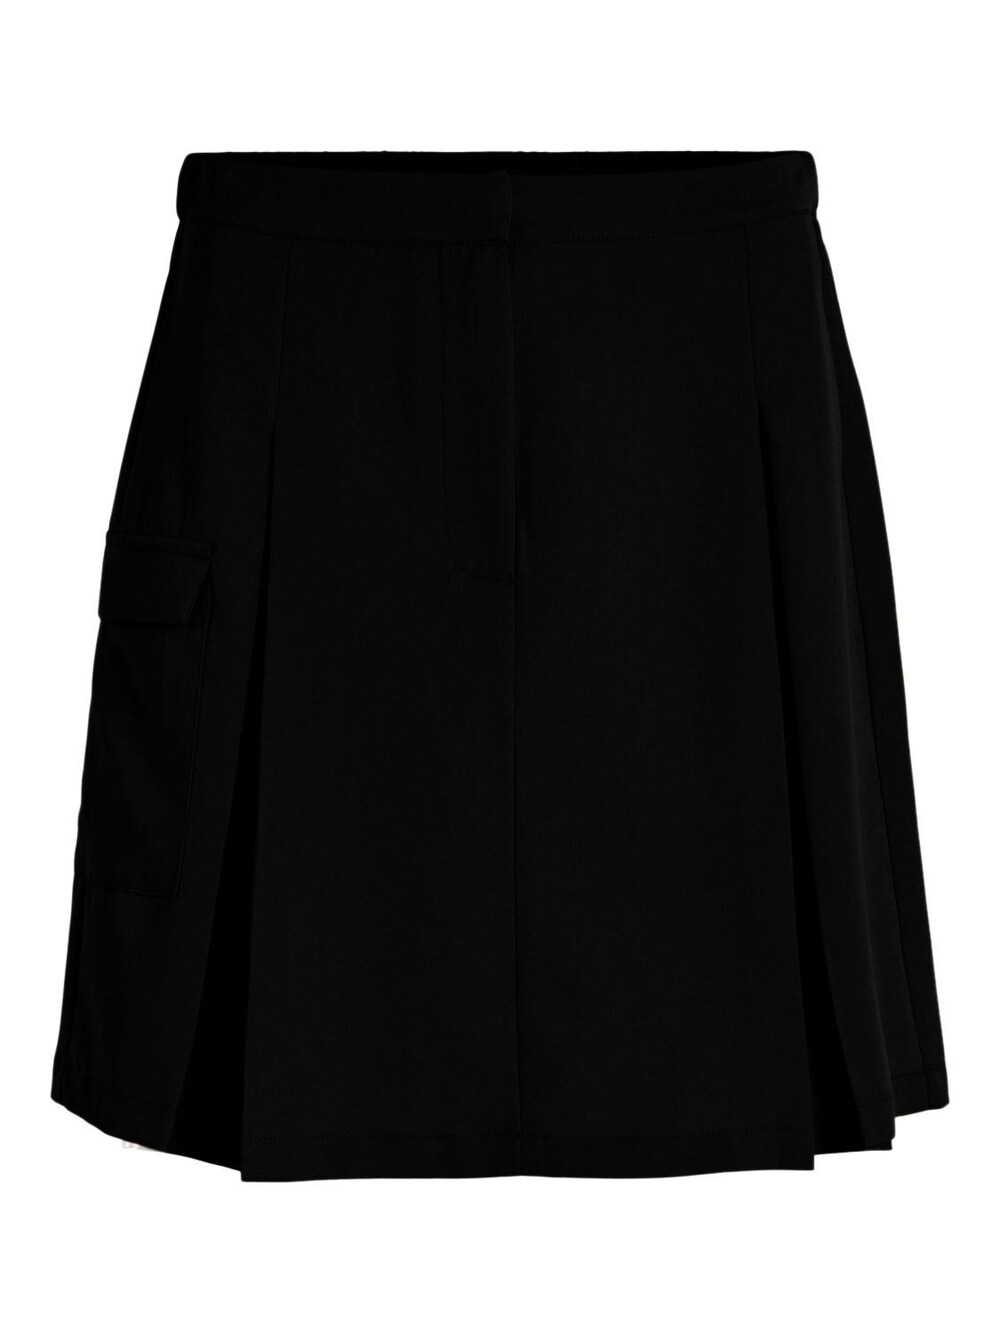 Юбка VILA LEA, черный юбка lea bruni 54y1267